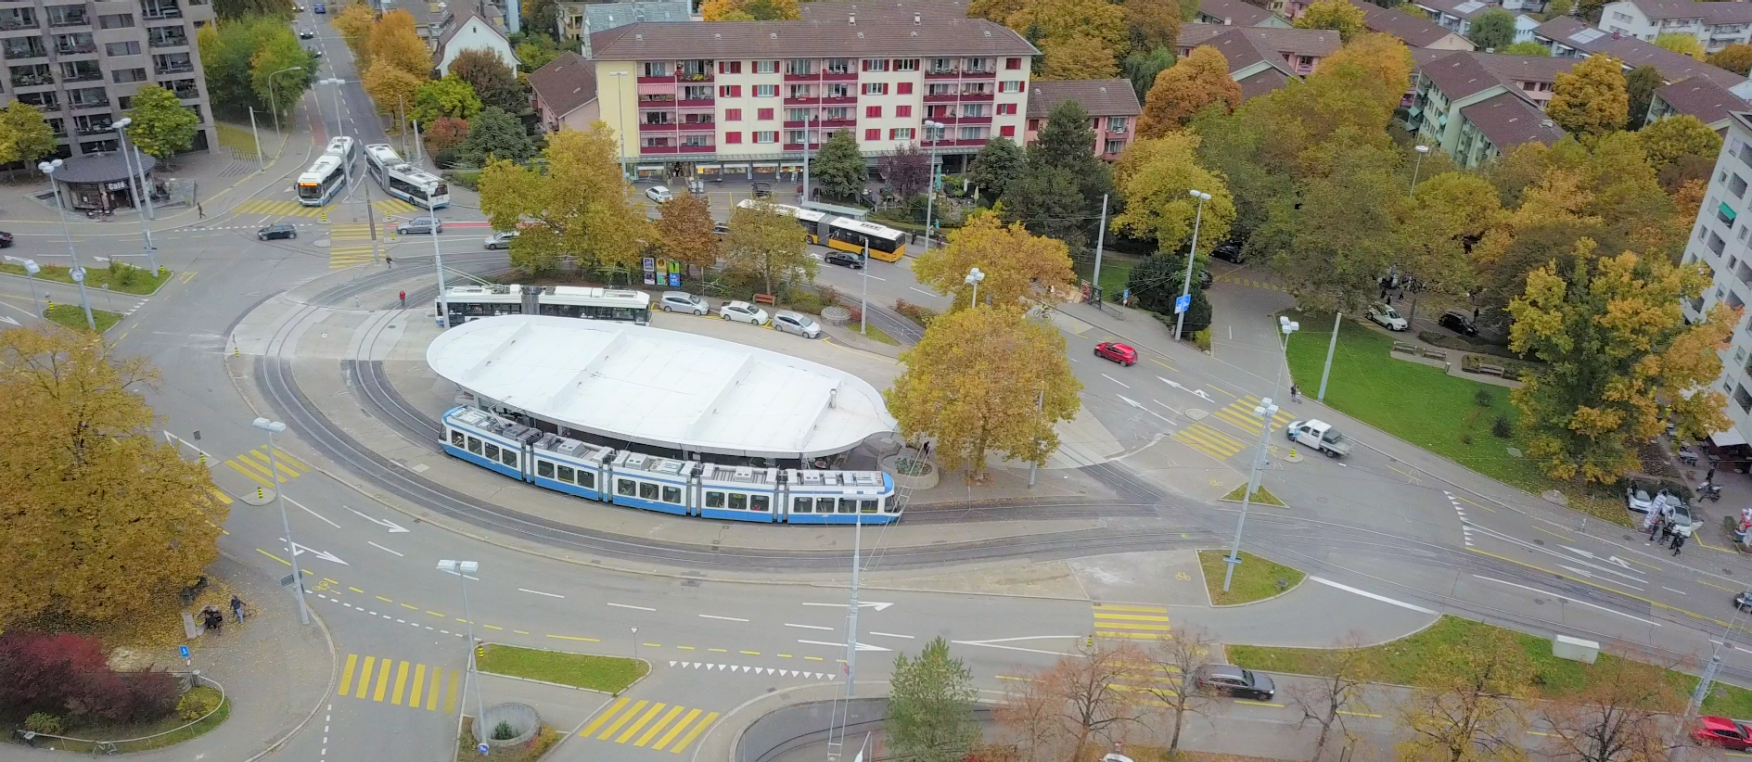 Tramwendeschlaufe Triemli im Herbst 2020, Drohnenbild ewp